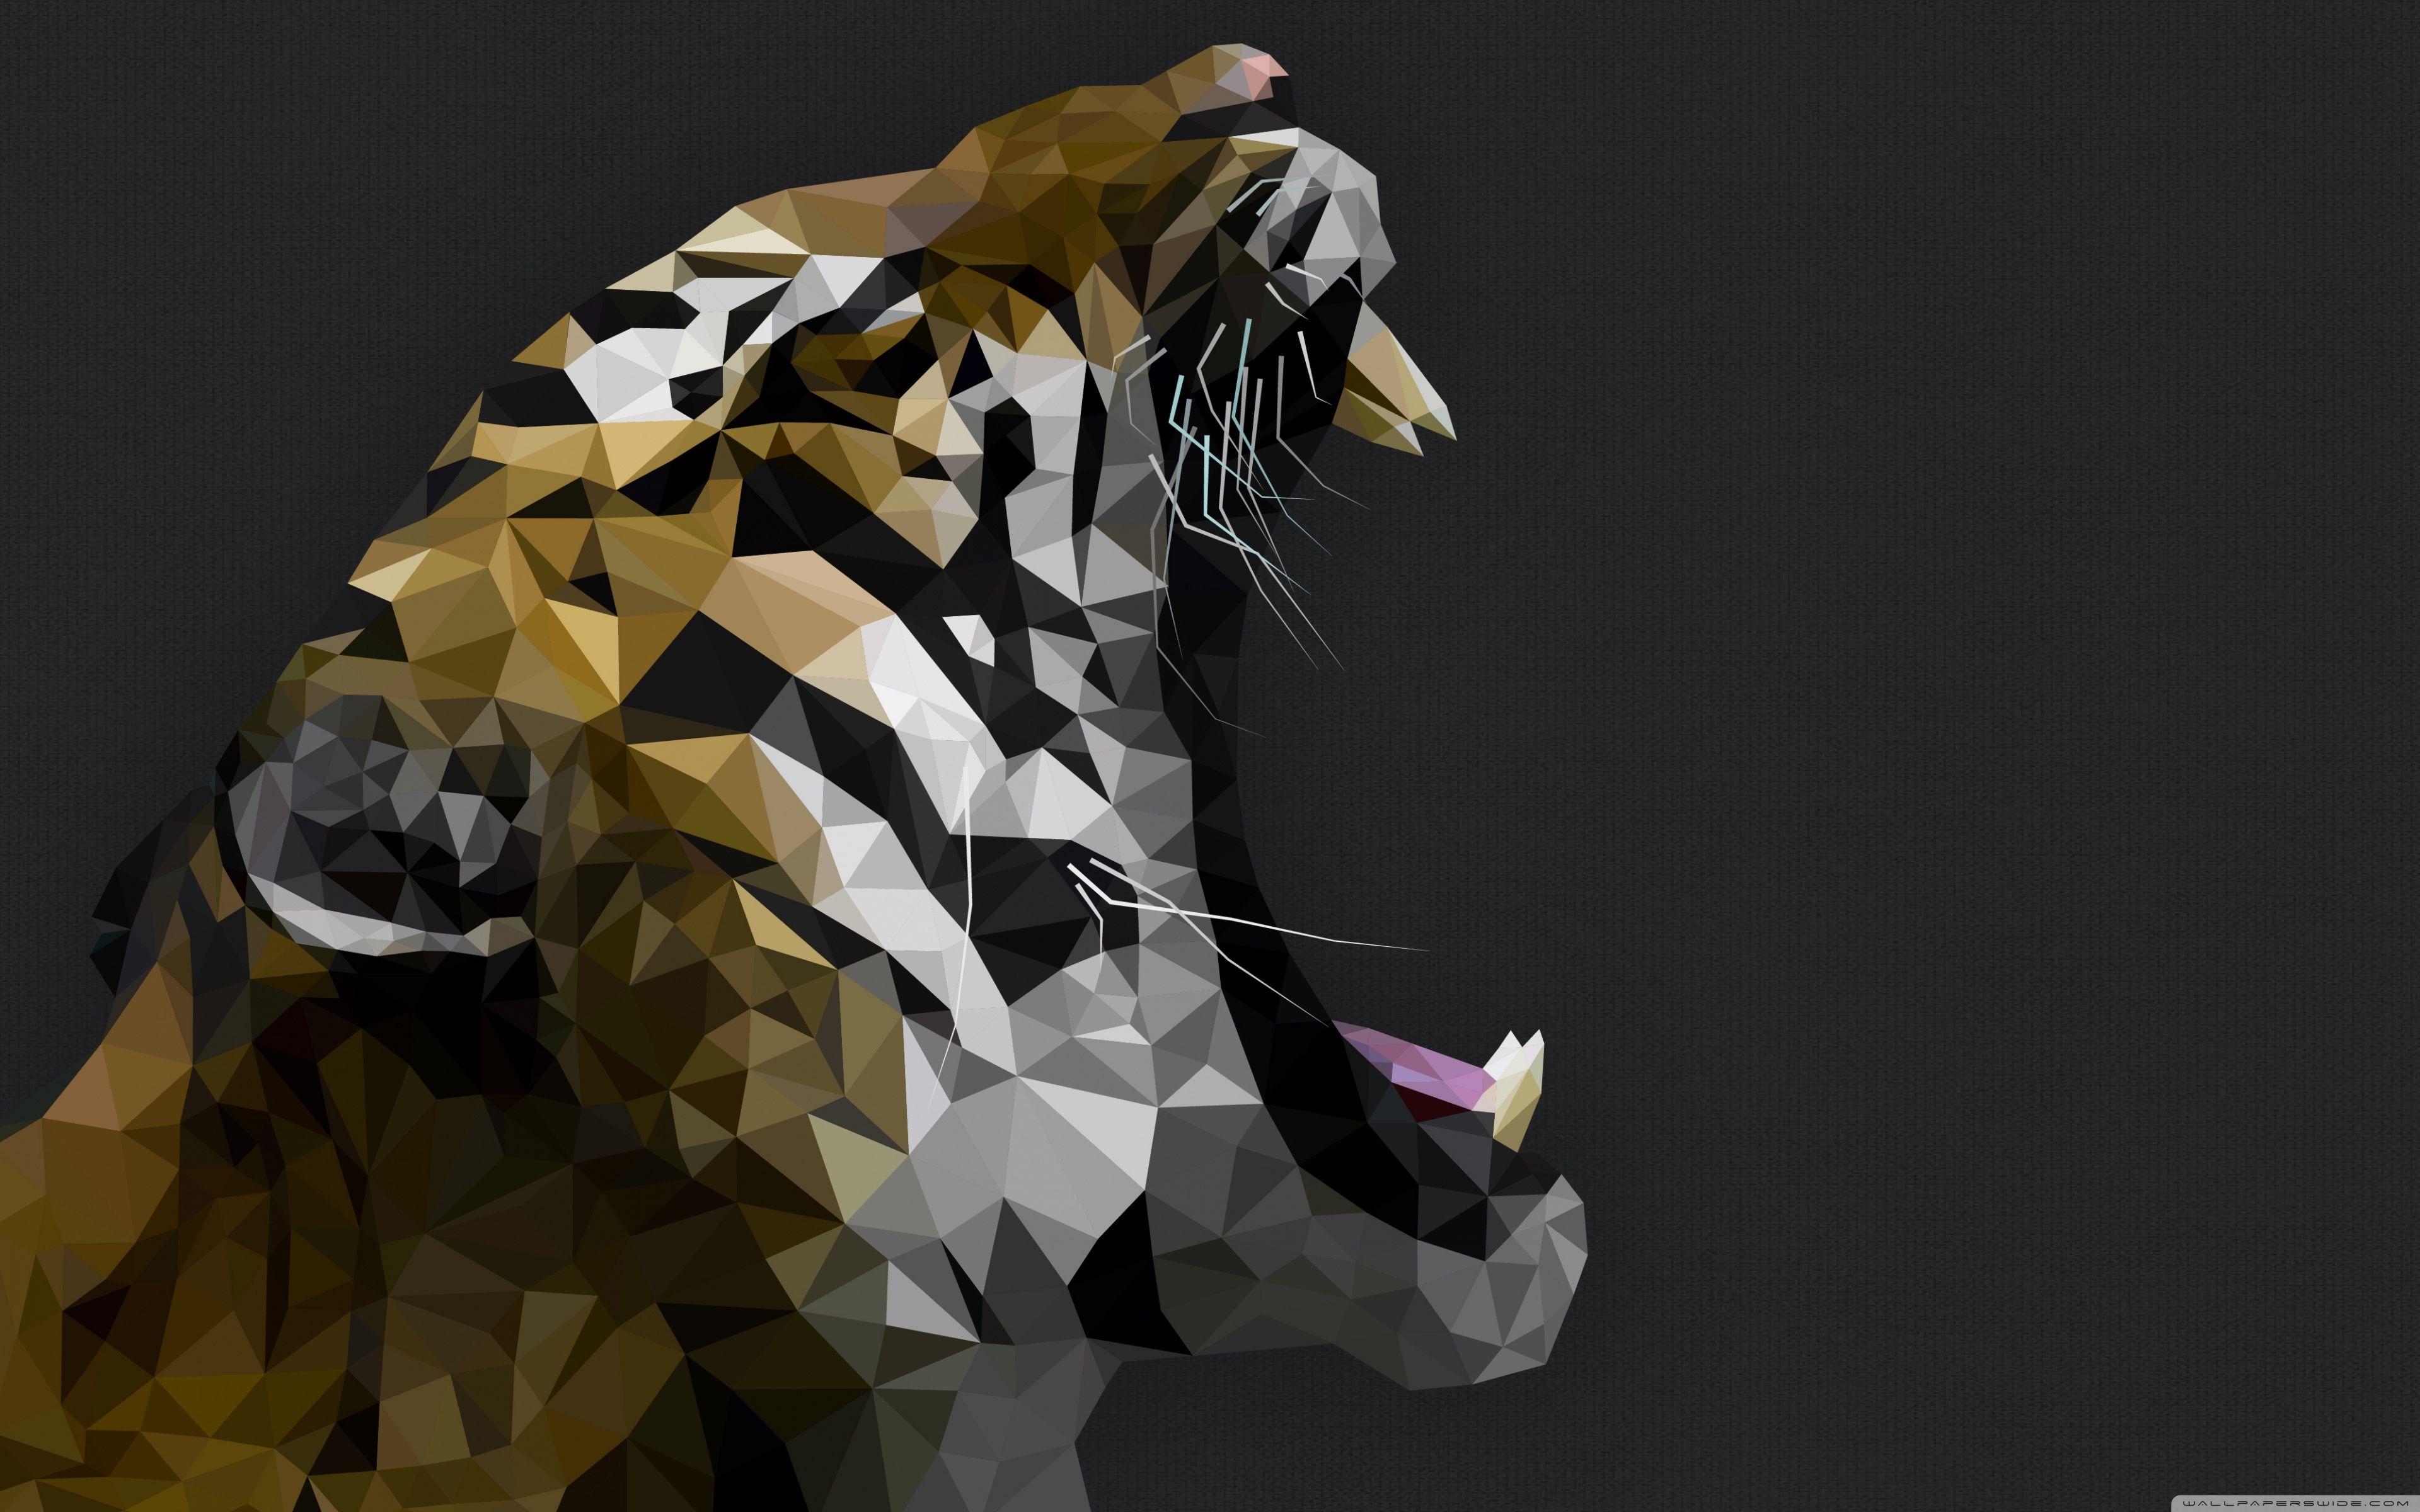 Polygon Tiger ❤ 4K HD Desktop Wallpaper for 4K Ultra HD TV • Wide